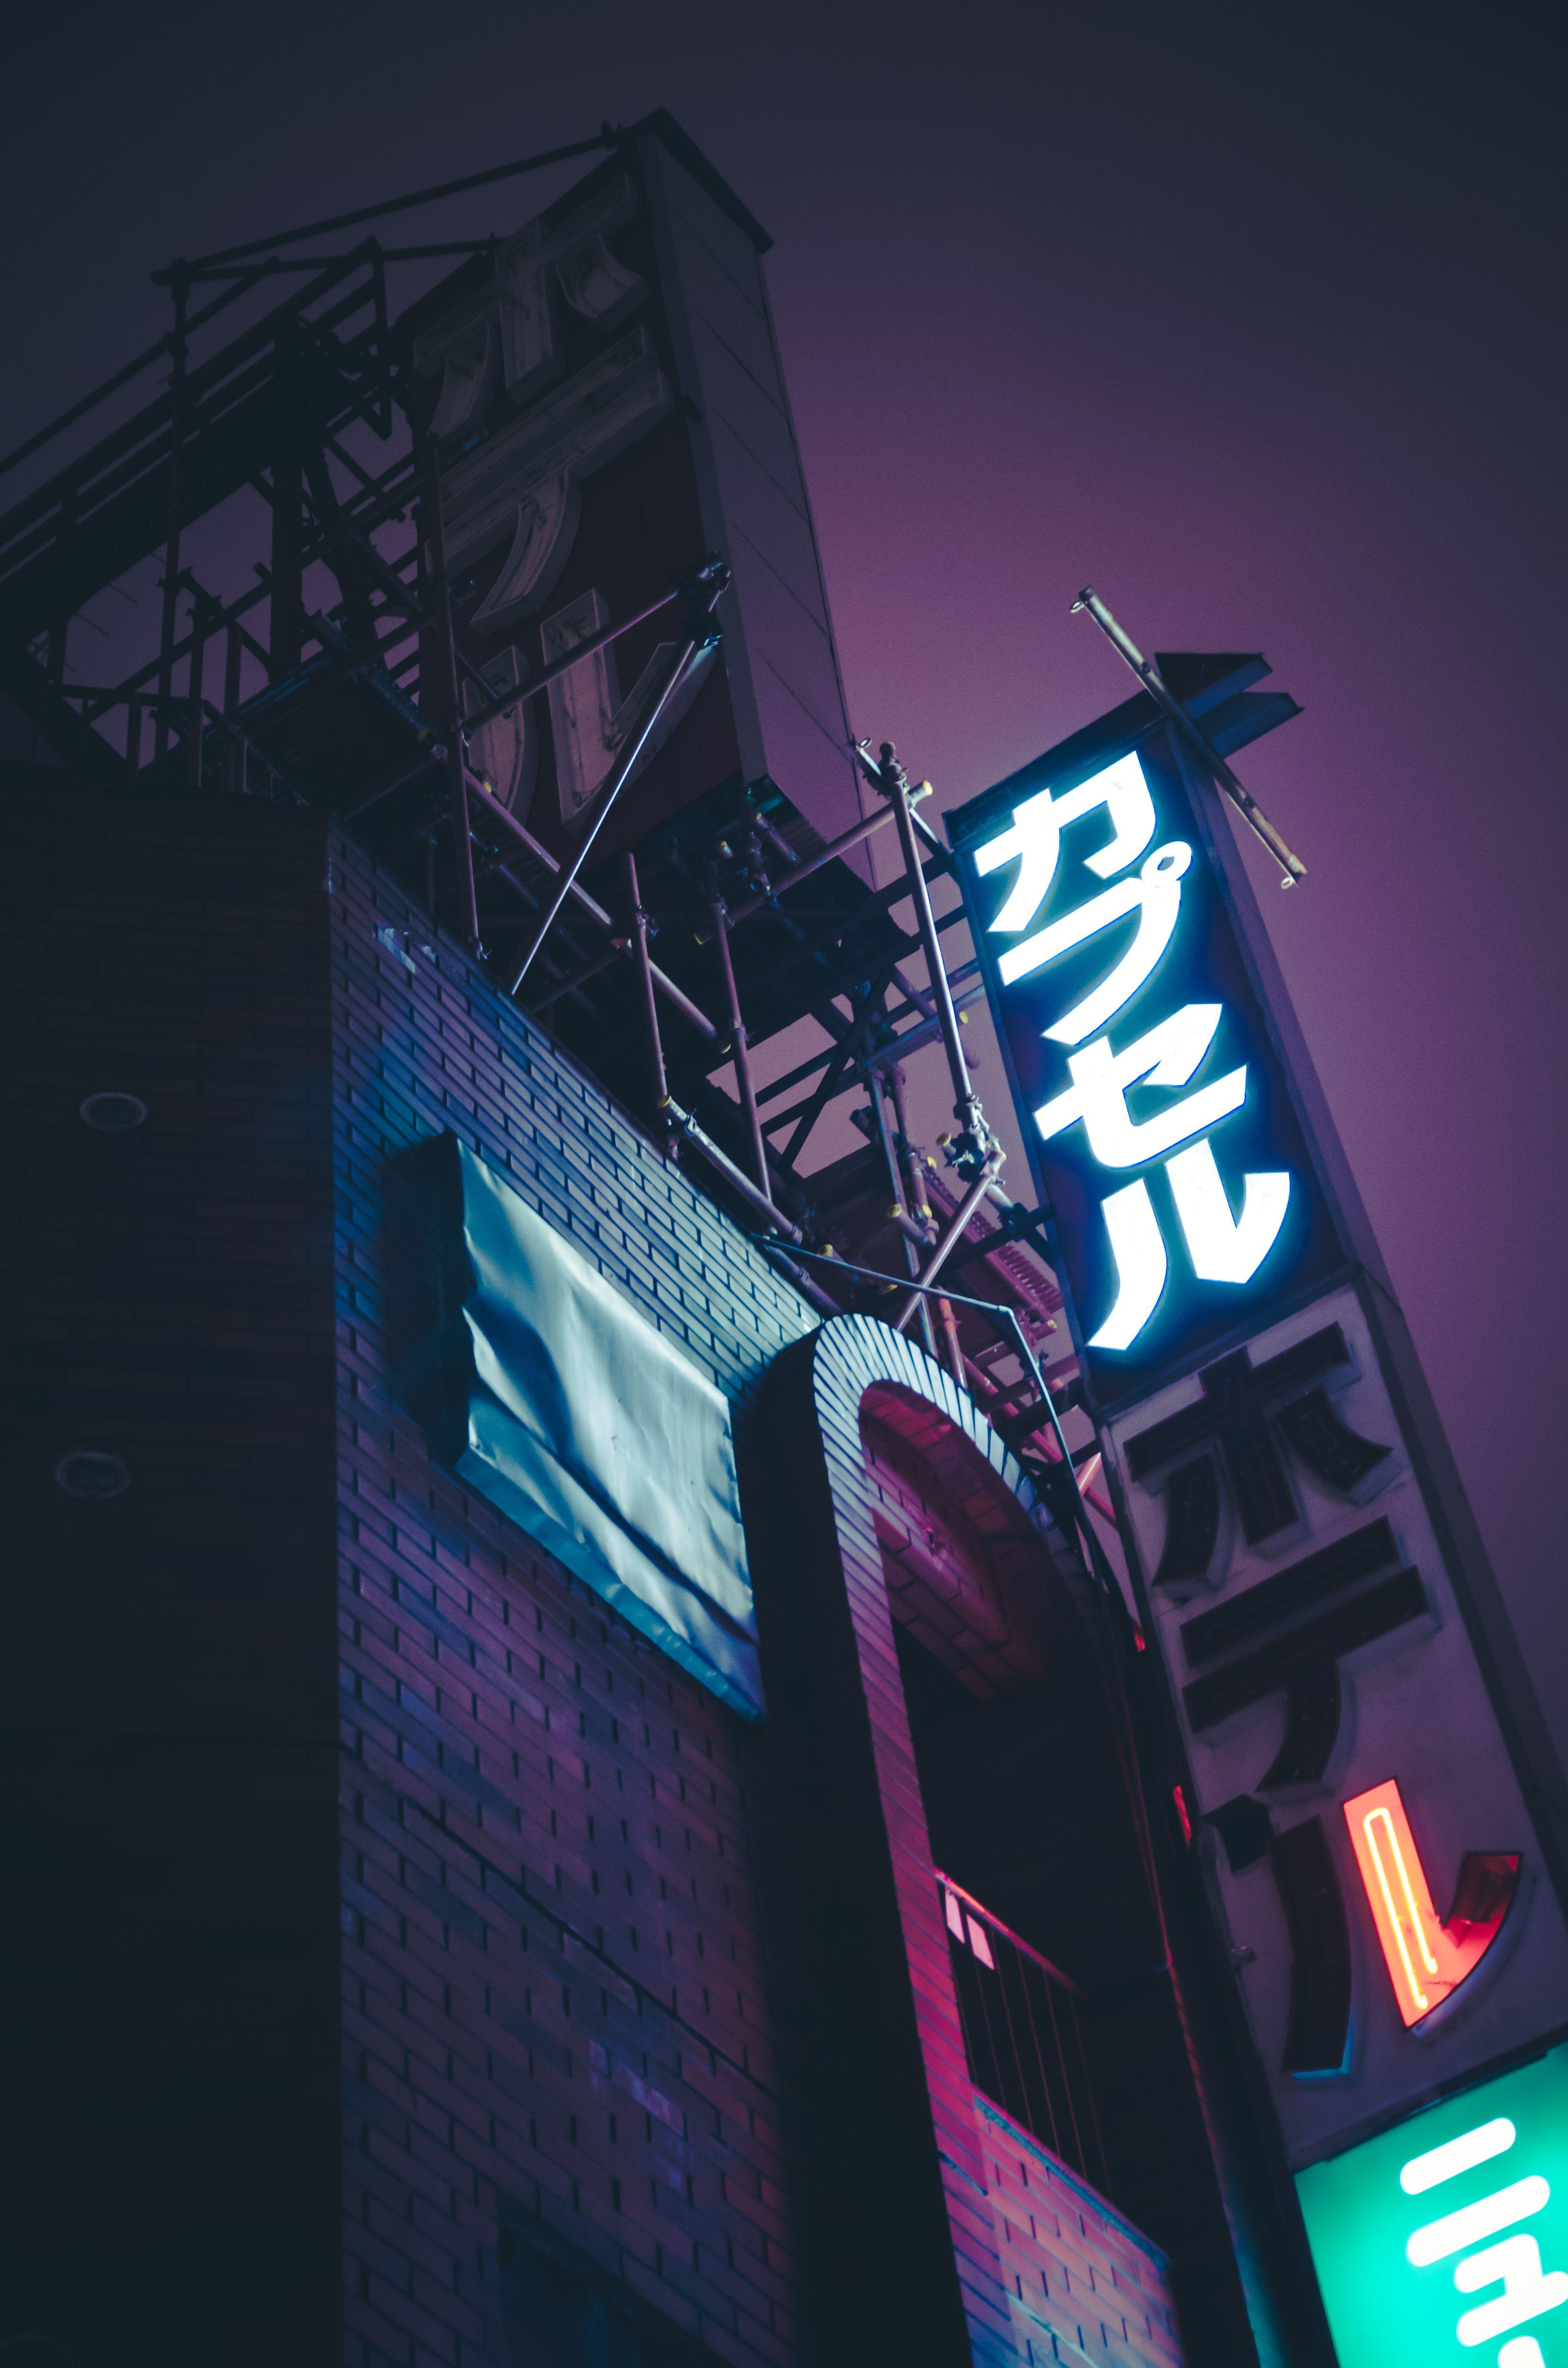 Capsule room hotel. Neon signs, Japanese aesthetic, Neon